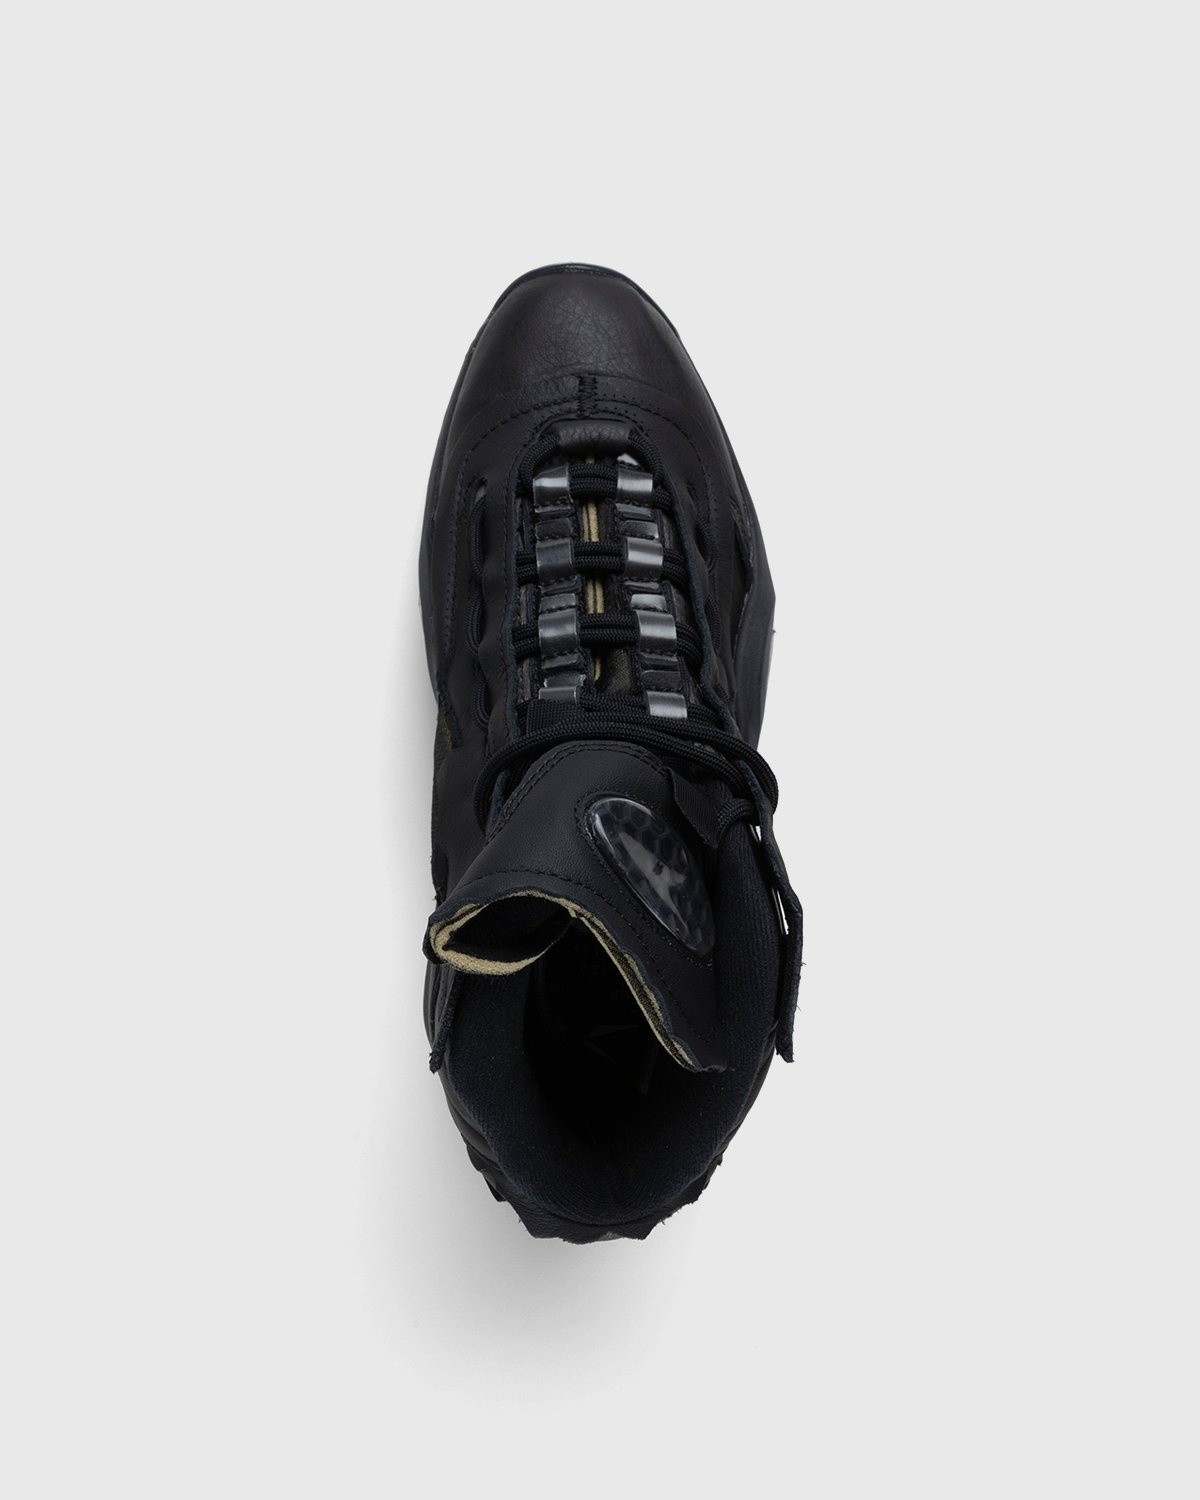 Reebok x Maison Margiela – Question Mid Memory Of Black - High Top Sneakers - Black - Image 6